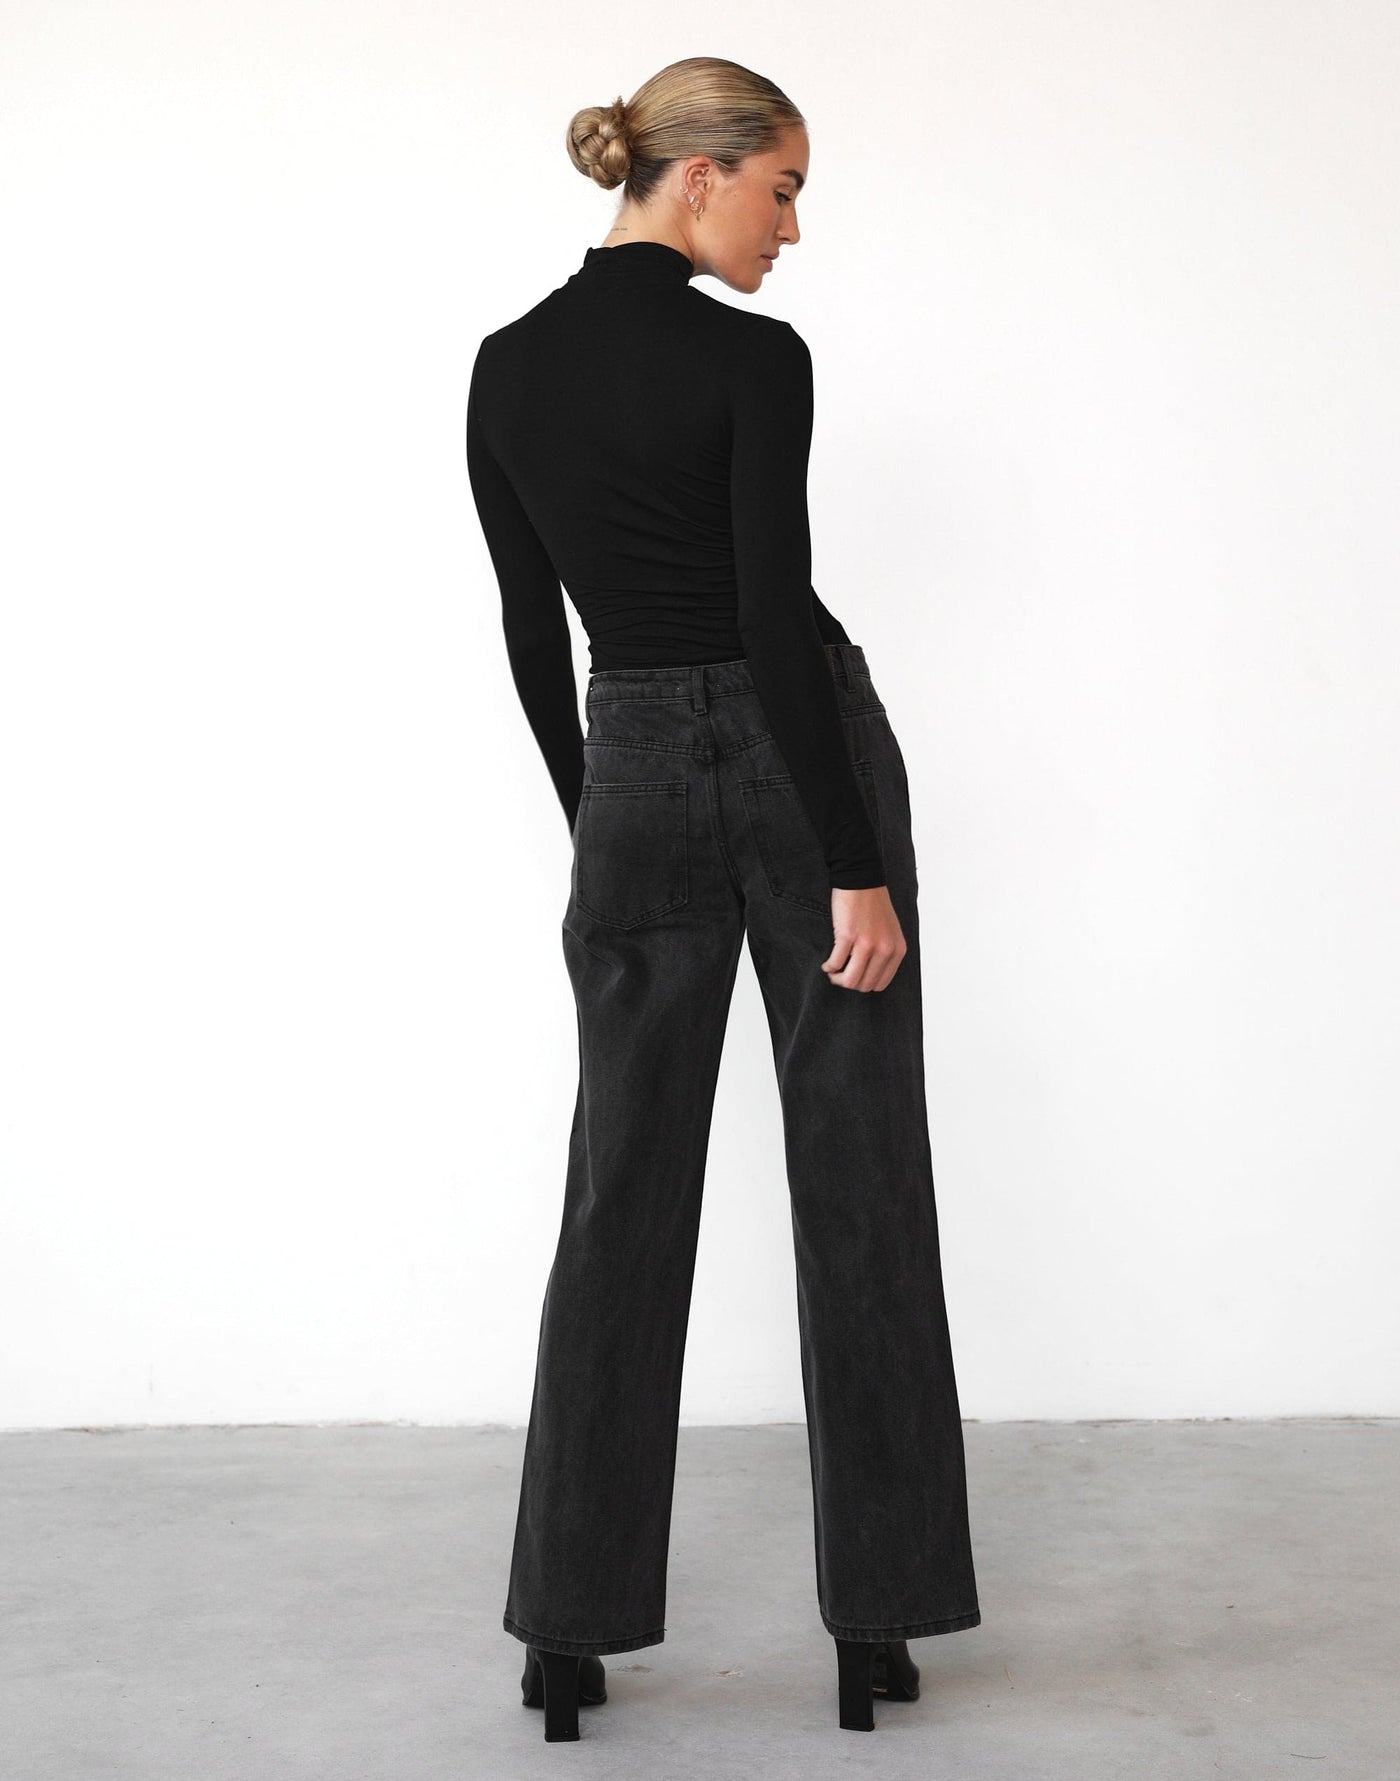  - Women's Pants - Charcoal Clothing